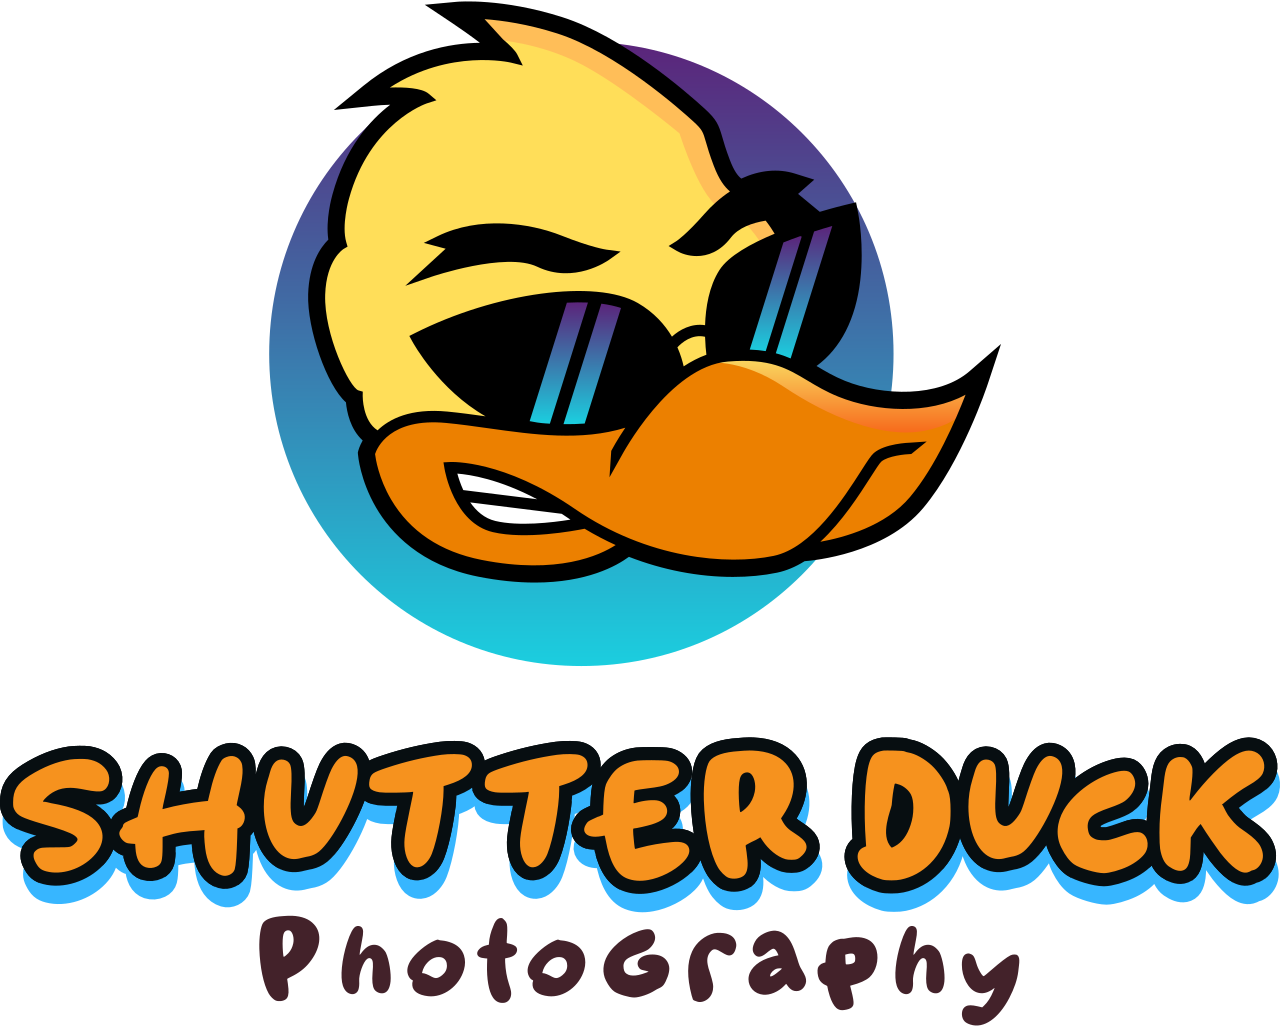 Shutter Duck's web page